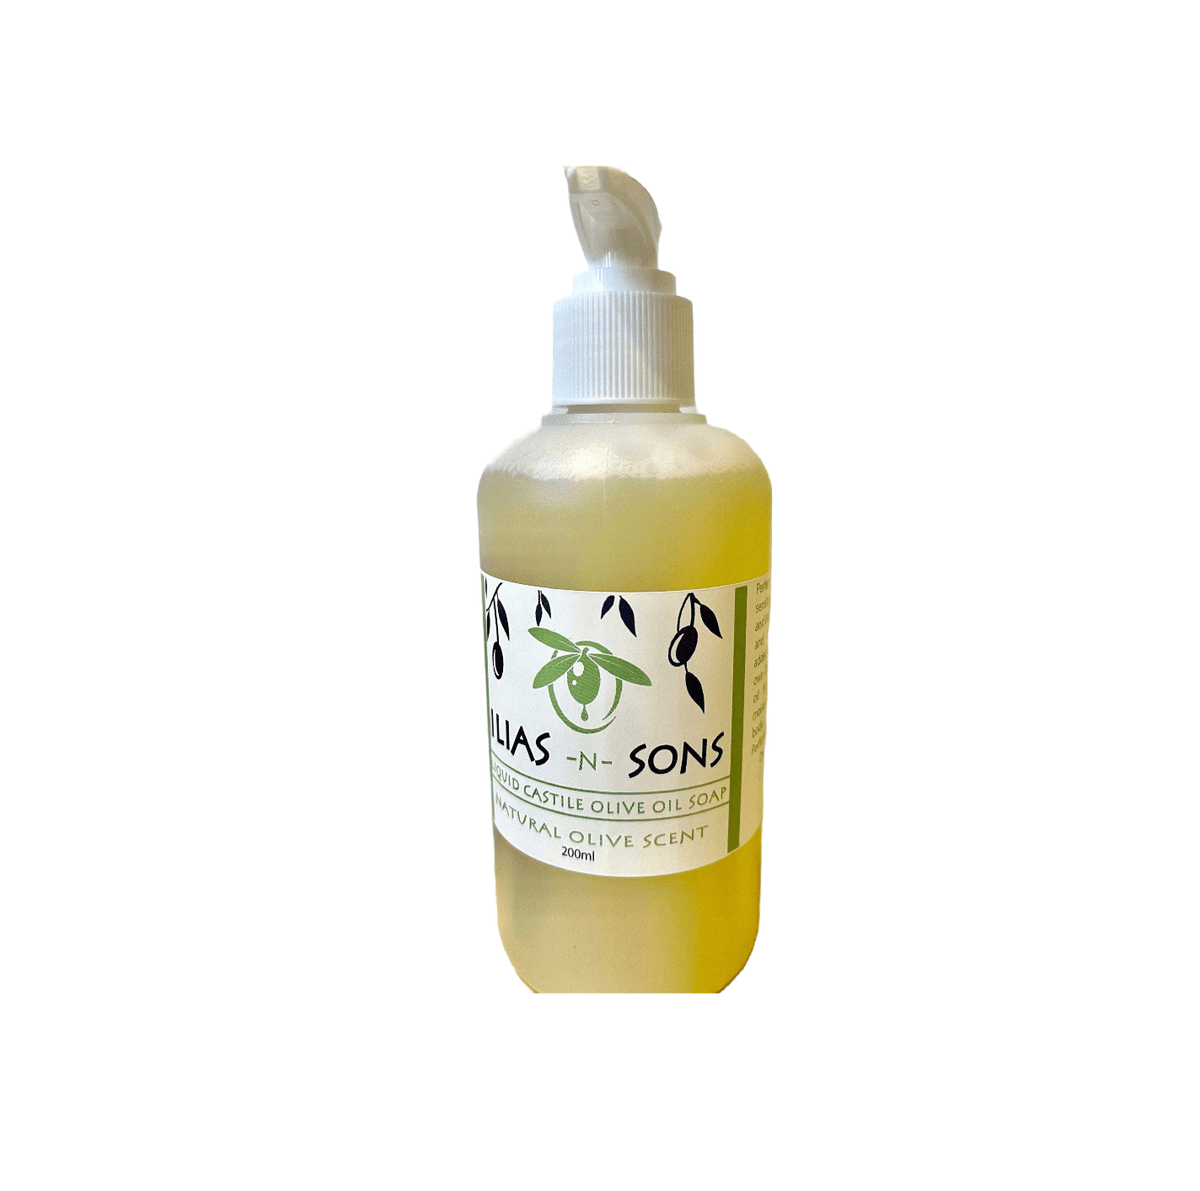 Lavender scented Liquid Castile Olive Oil Soap